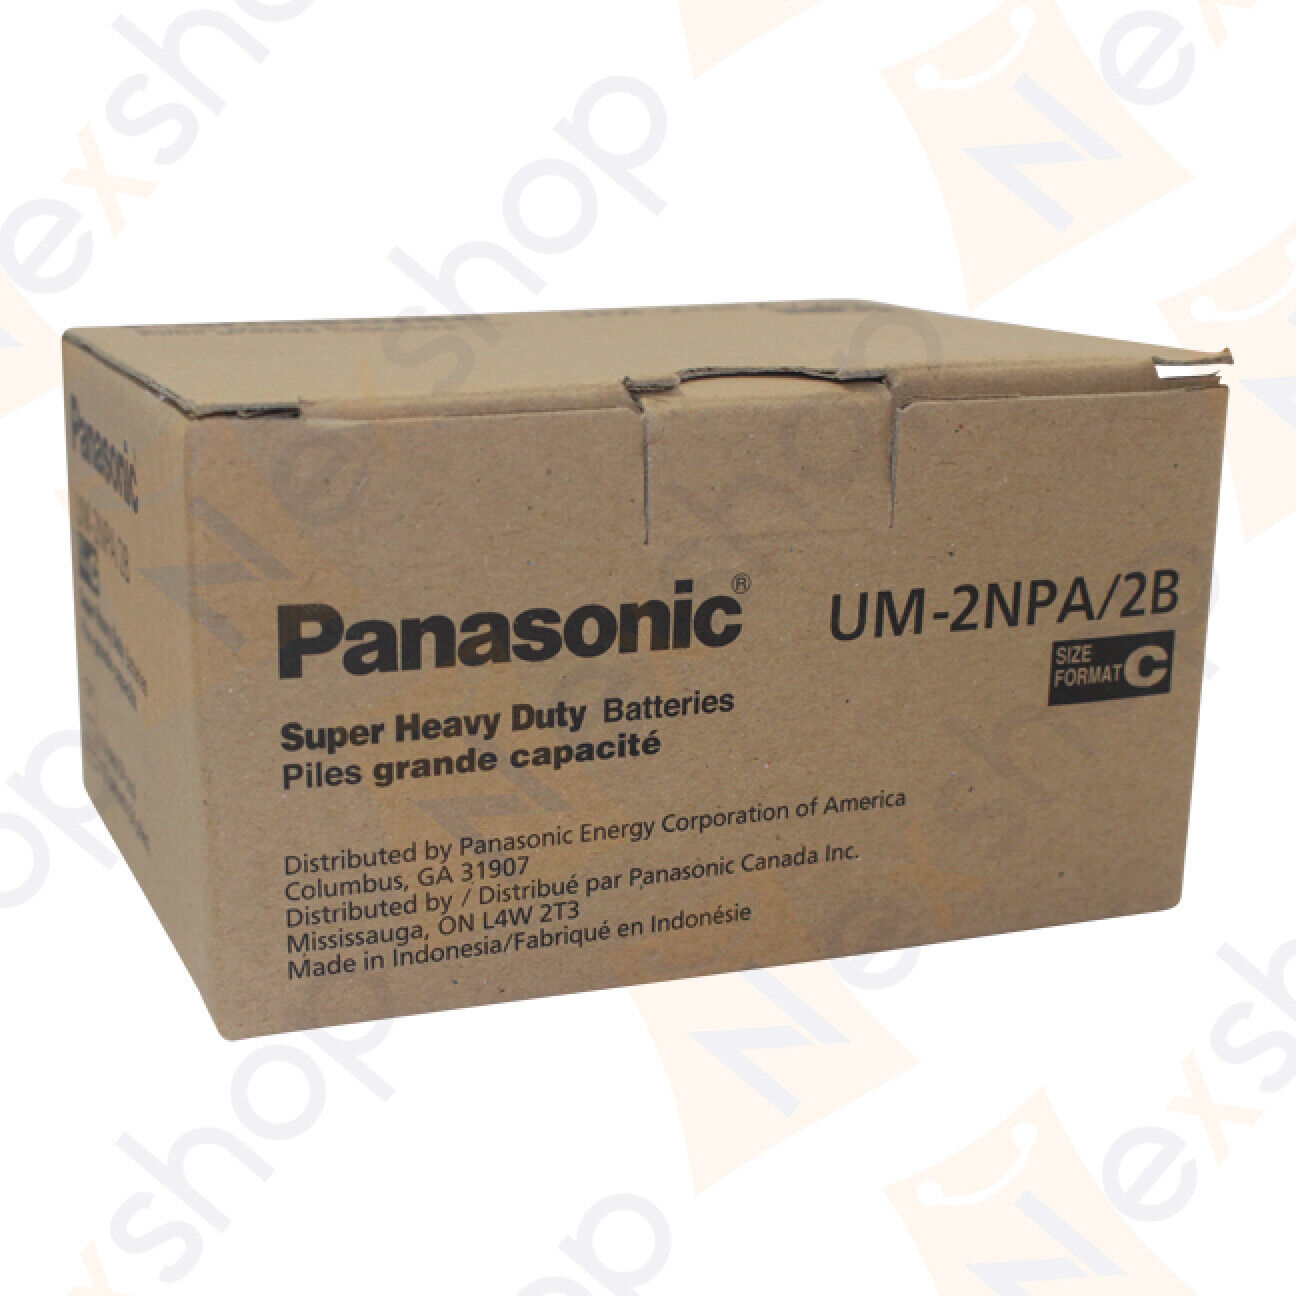 4x Panasonic C 1.5V Batteries Super Heavy Duty Power Carbon Zinc C Battery Panasonic UM-2NPA/2B - фотография #4